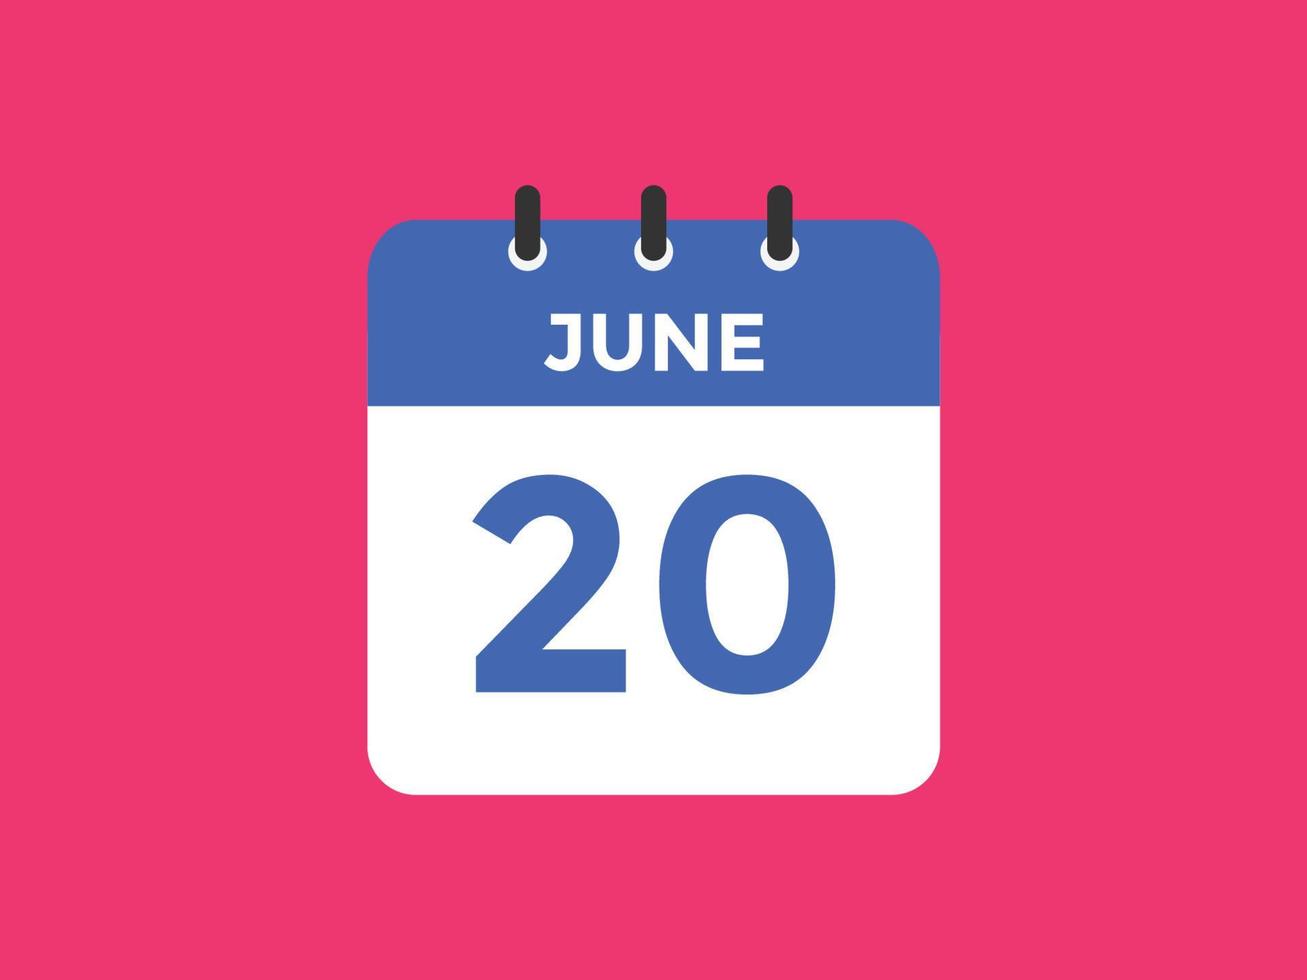 juni 20 kalender påminnelse. 20:e juni dagligen kalender ikon mall. kalender 20:e juni ikon design mall. vektor illustration